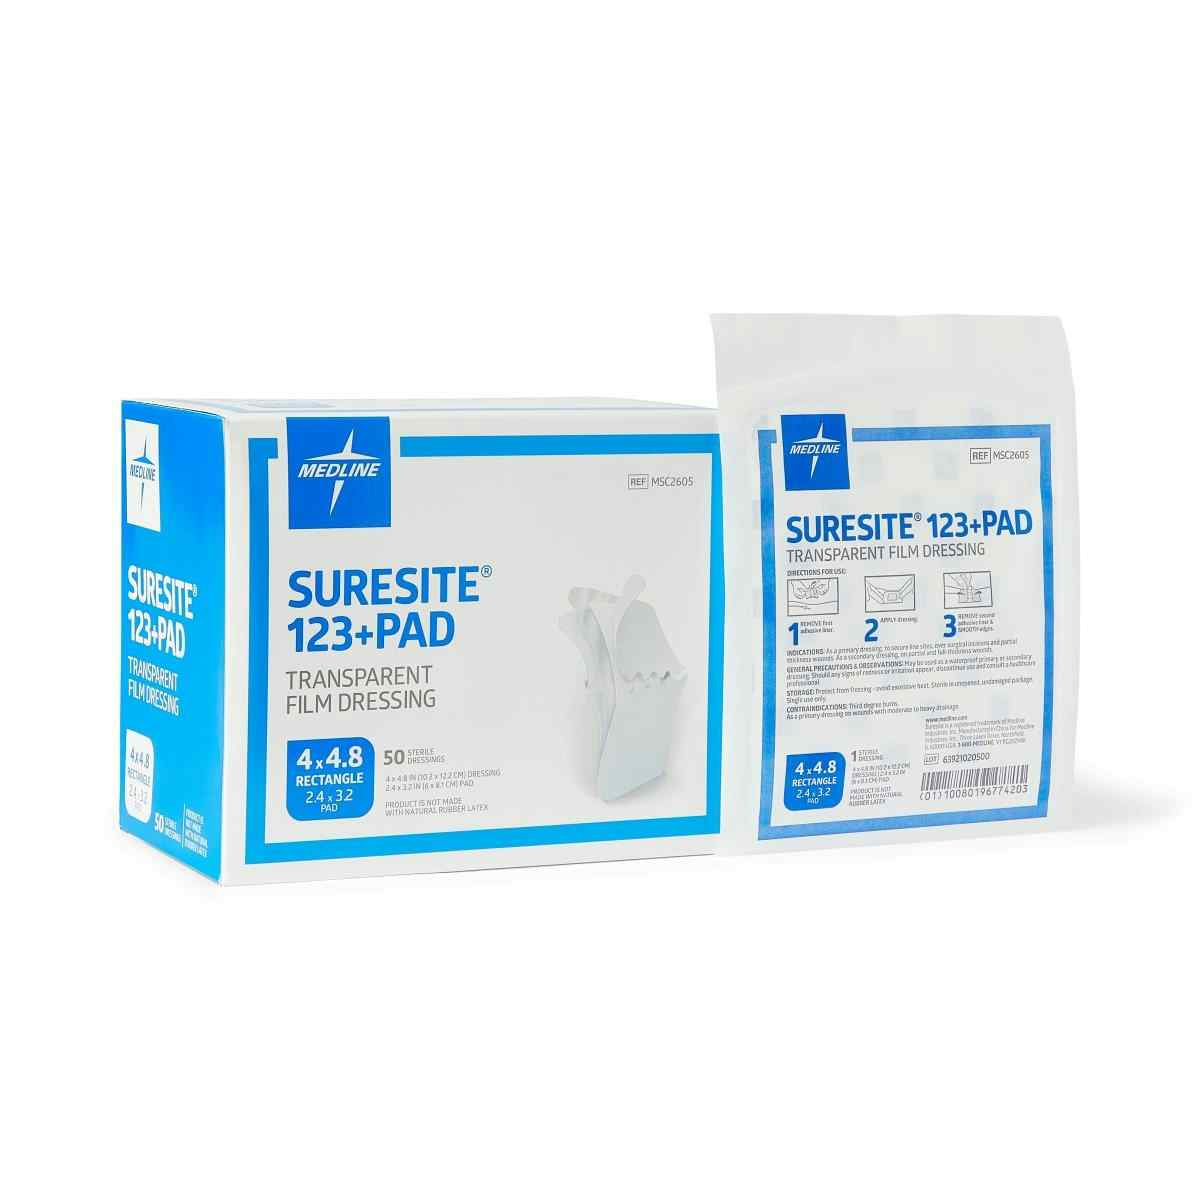 Suresite 123+ Pad Transparent Film Dressing, MSC2605Z, 4" X 4.8" - Box of 50 